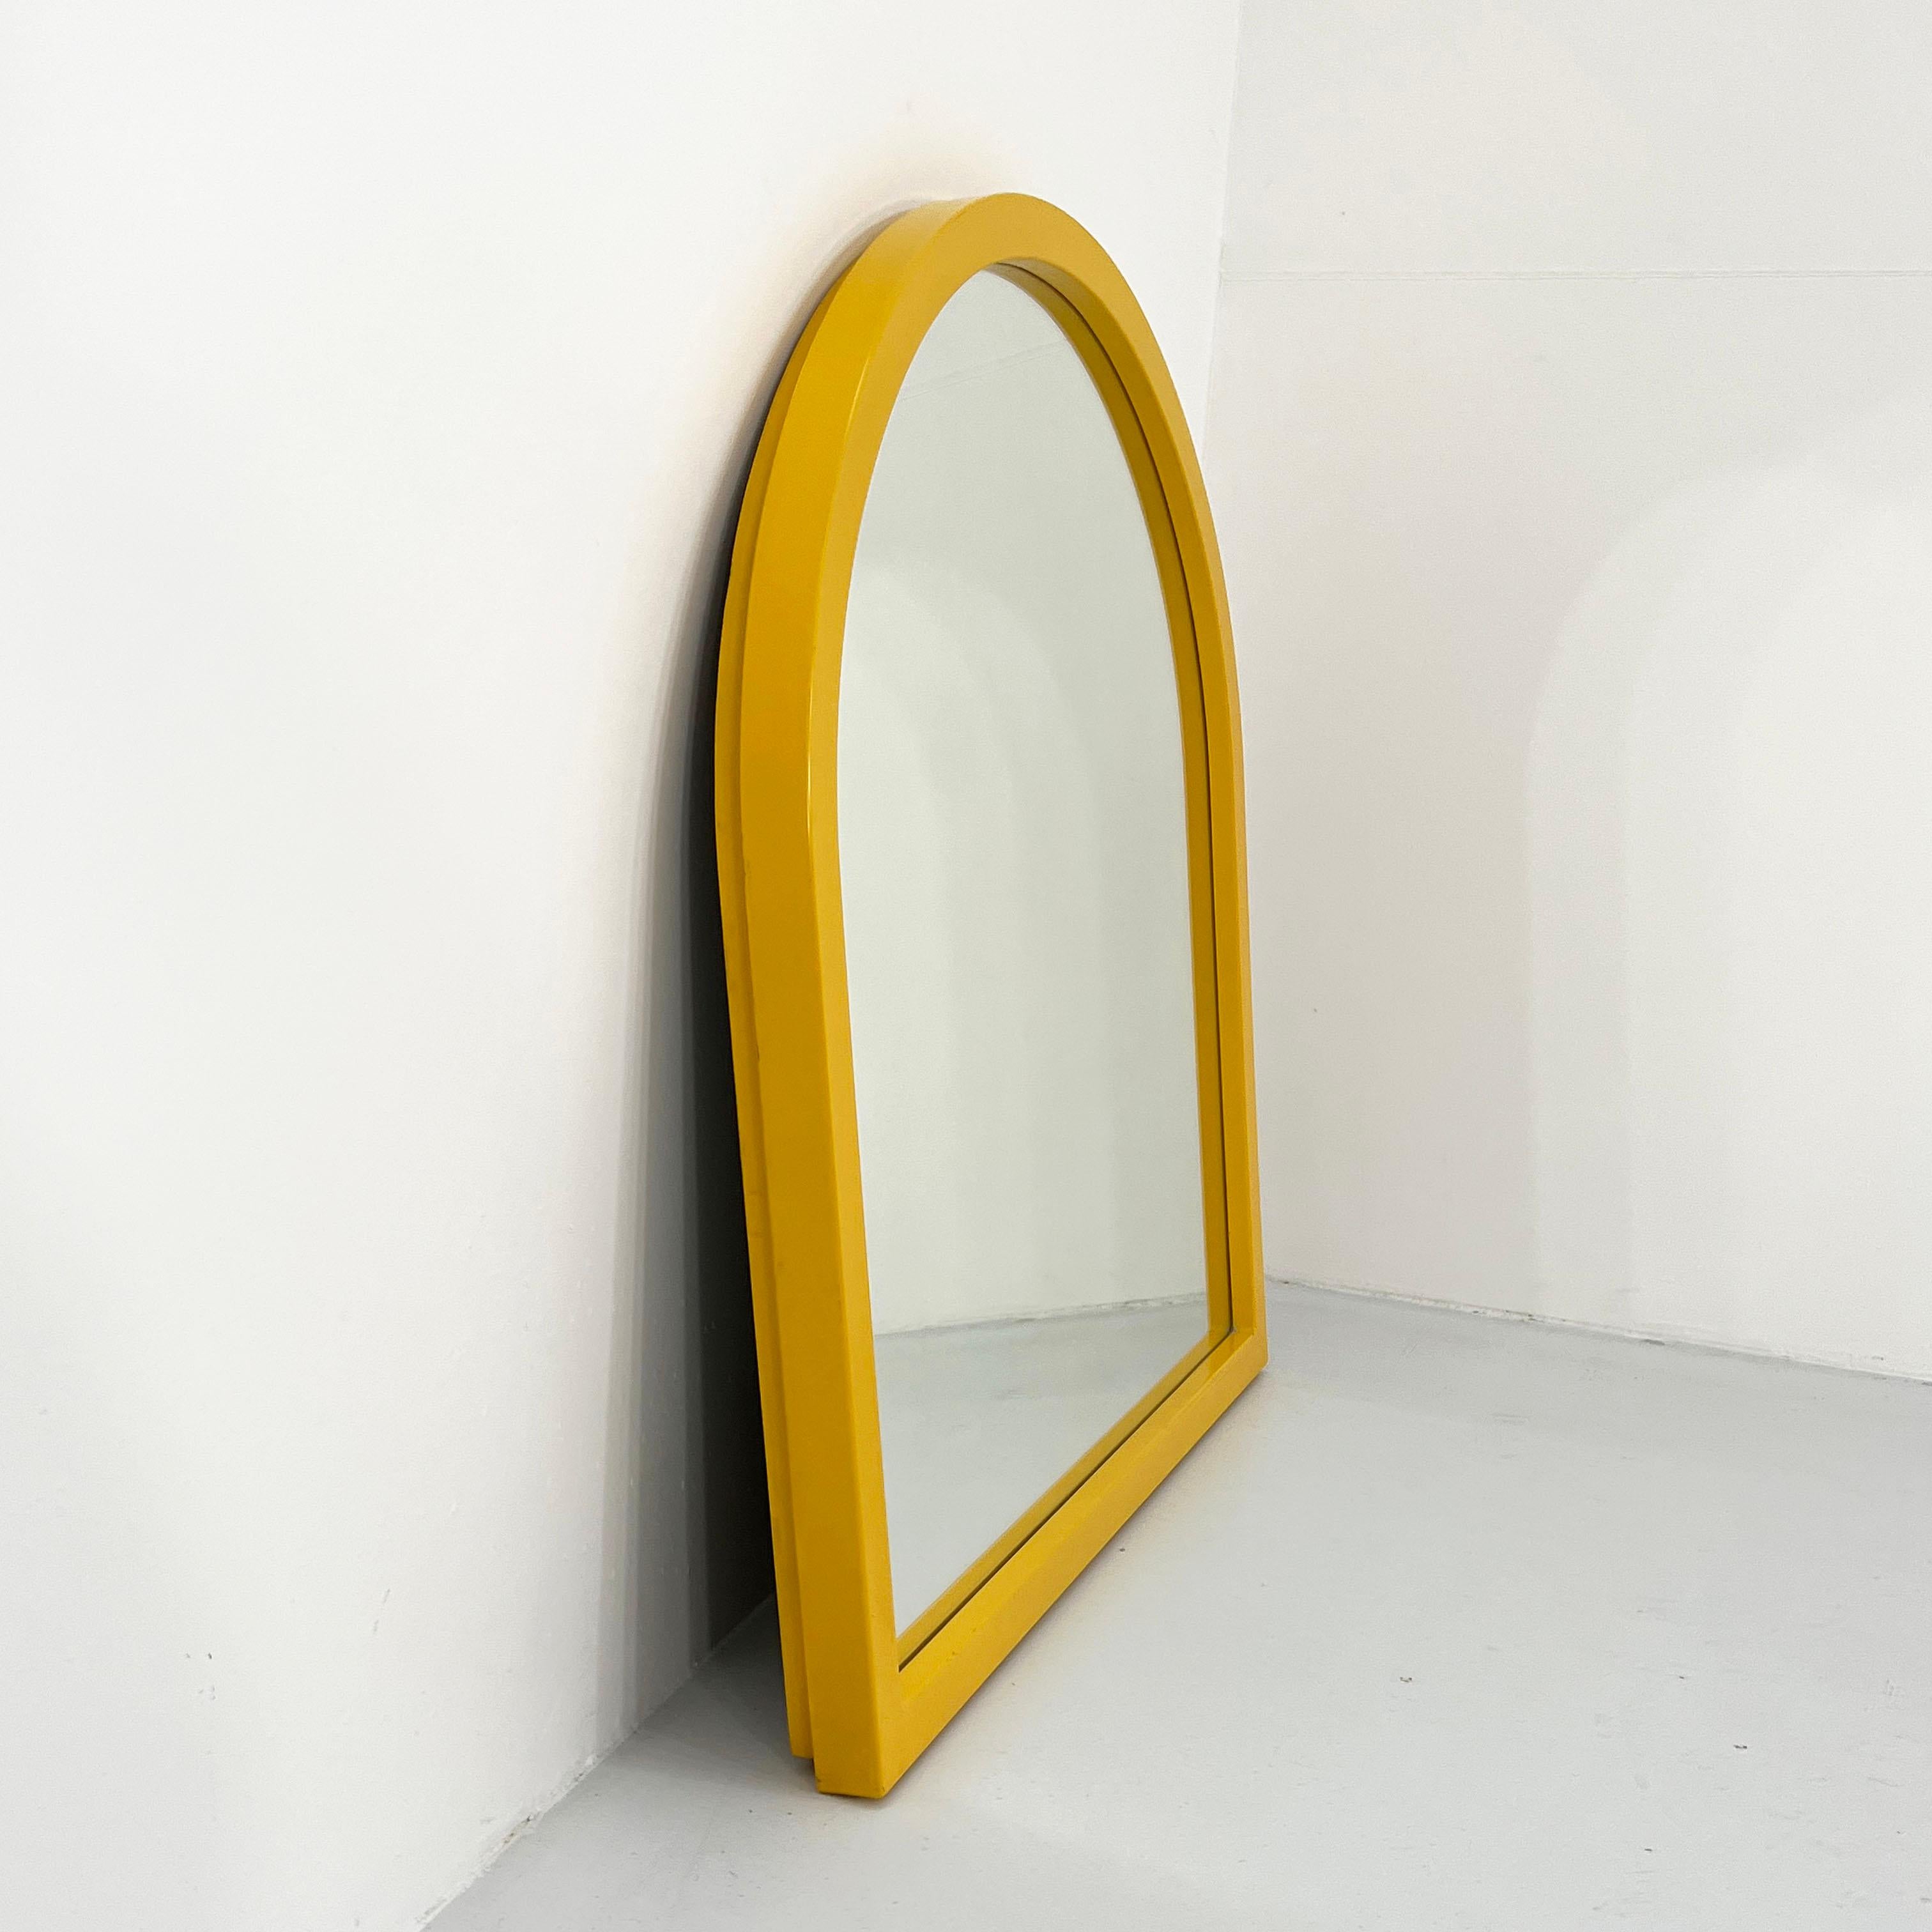 Italian Yellow Frame Mirror Model 4720 by Anna Castelli Ferrieri for Kartell, 1980s